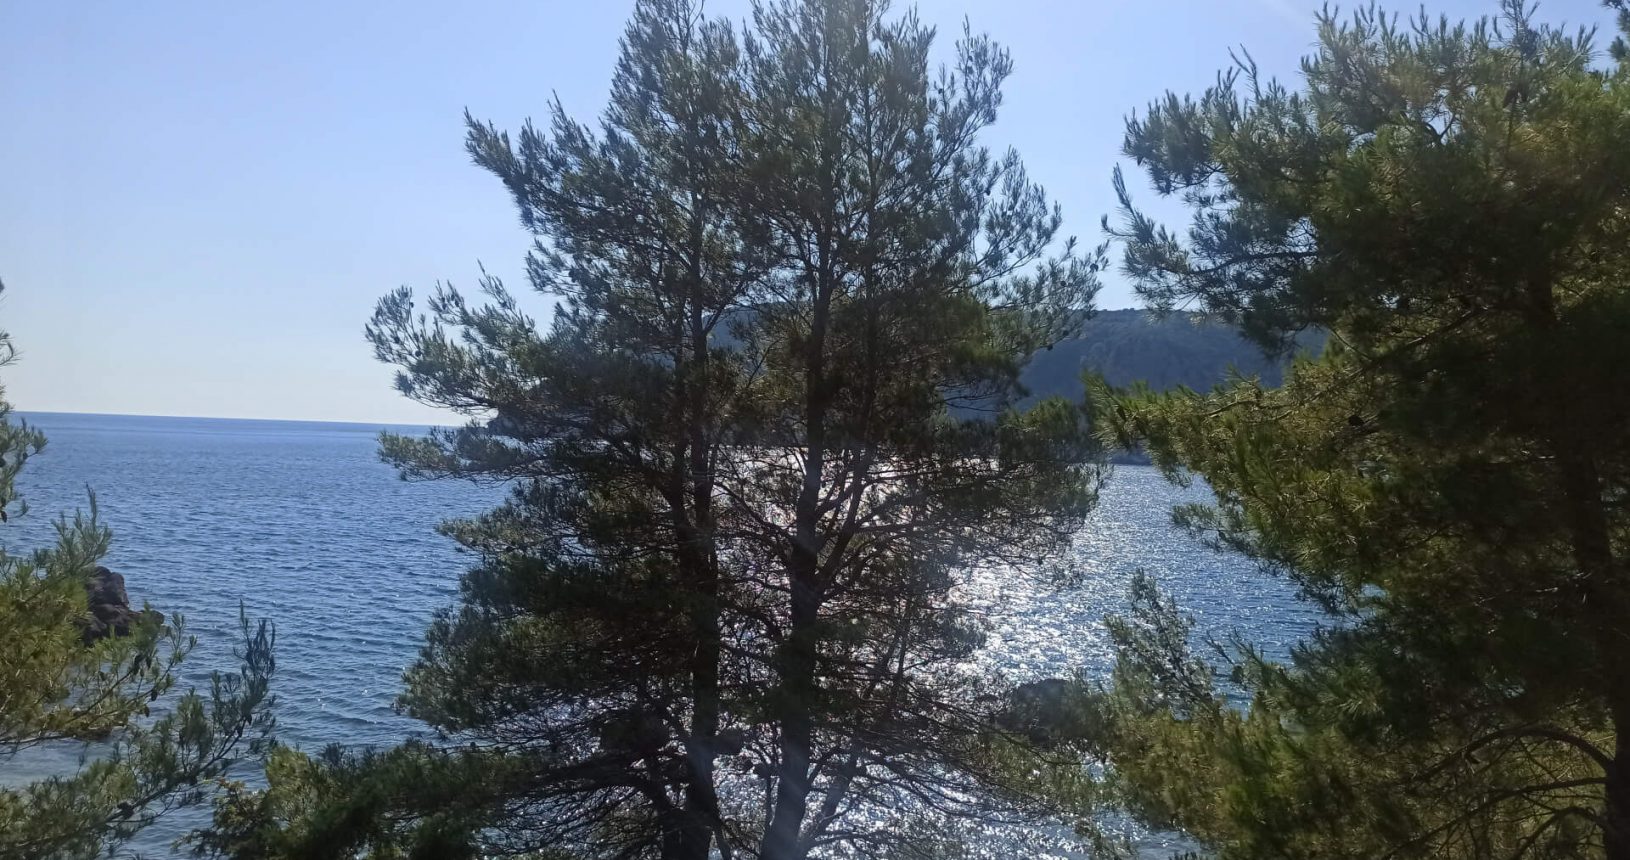 The view to Little Maljevik Beach through the trees